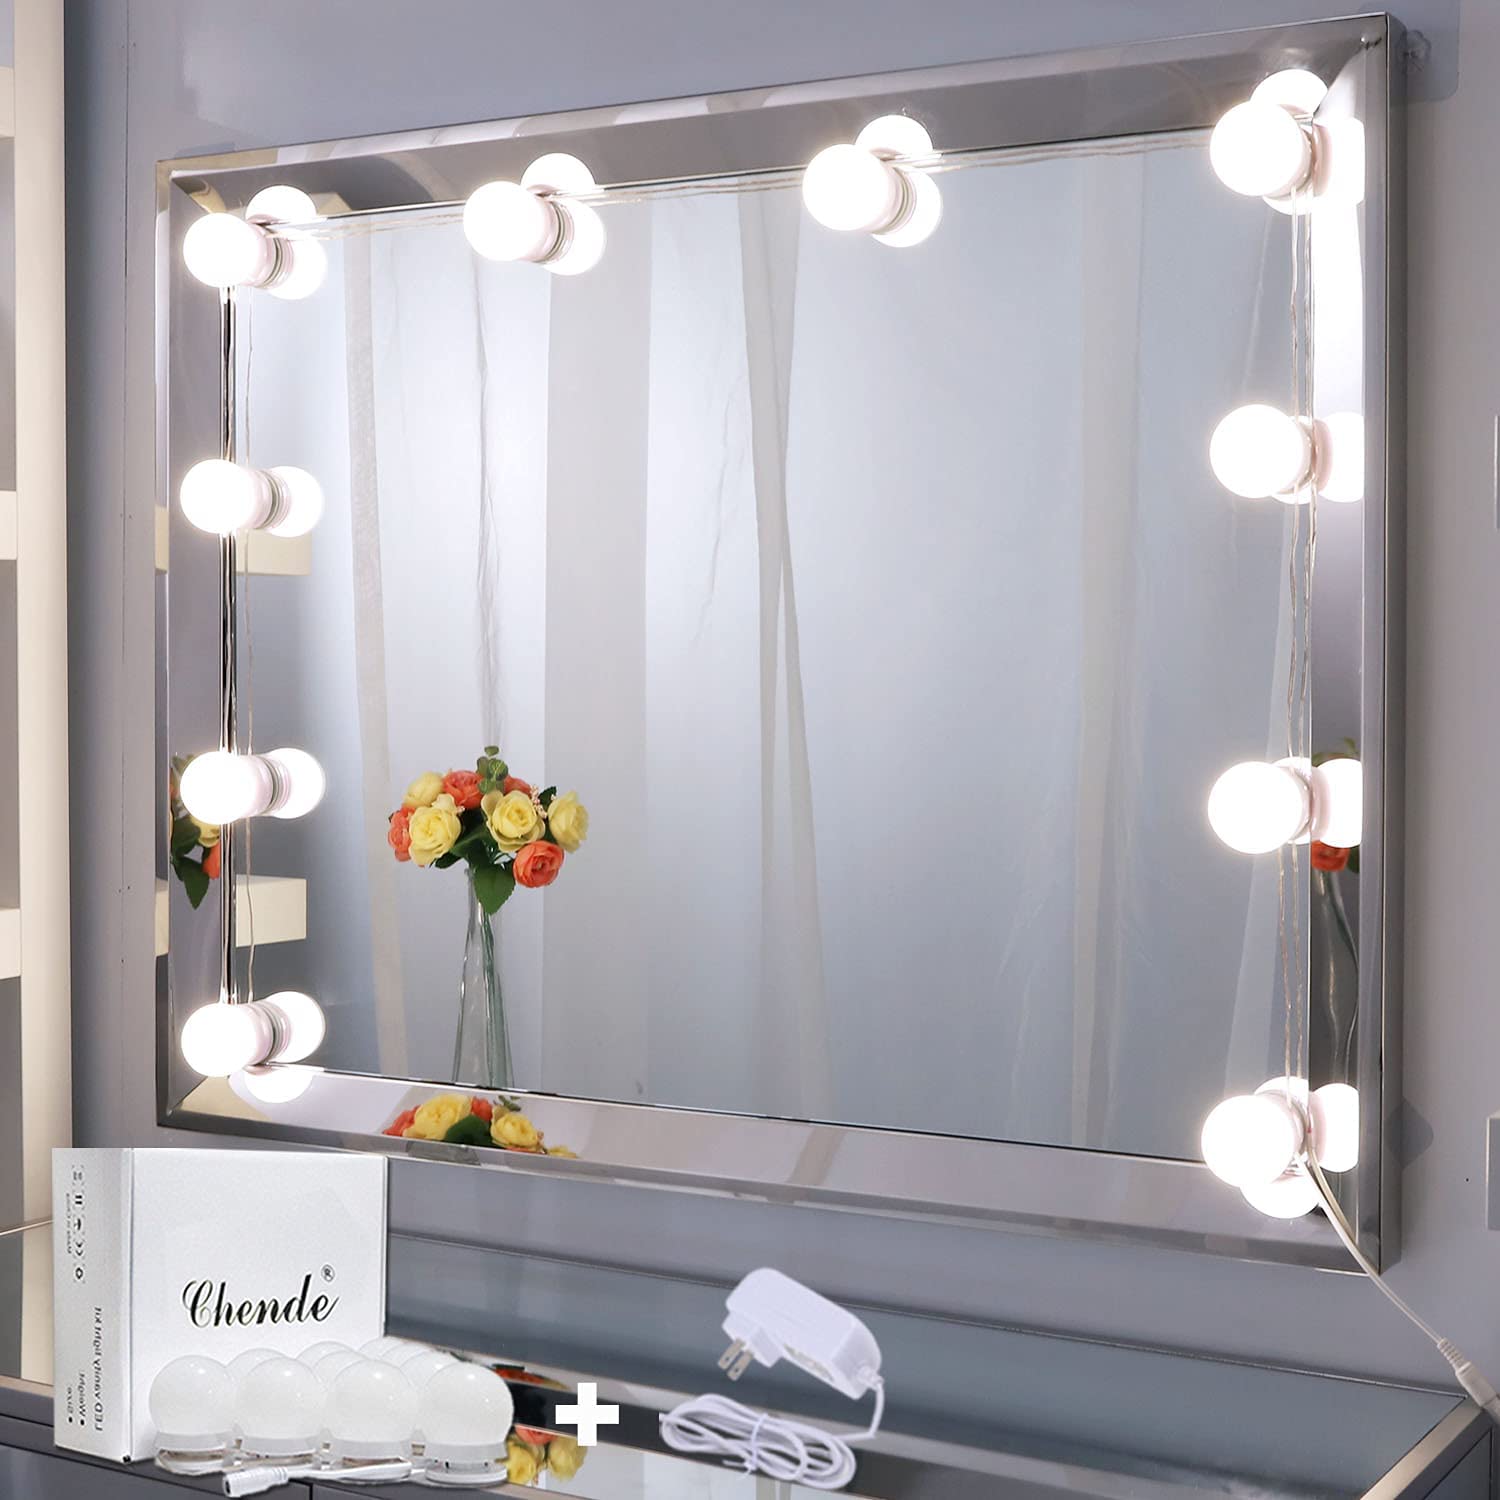 Chende Professional Vanity Lights For Makeup Kit